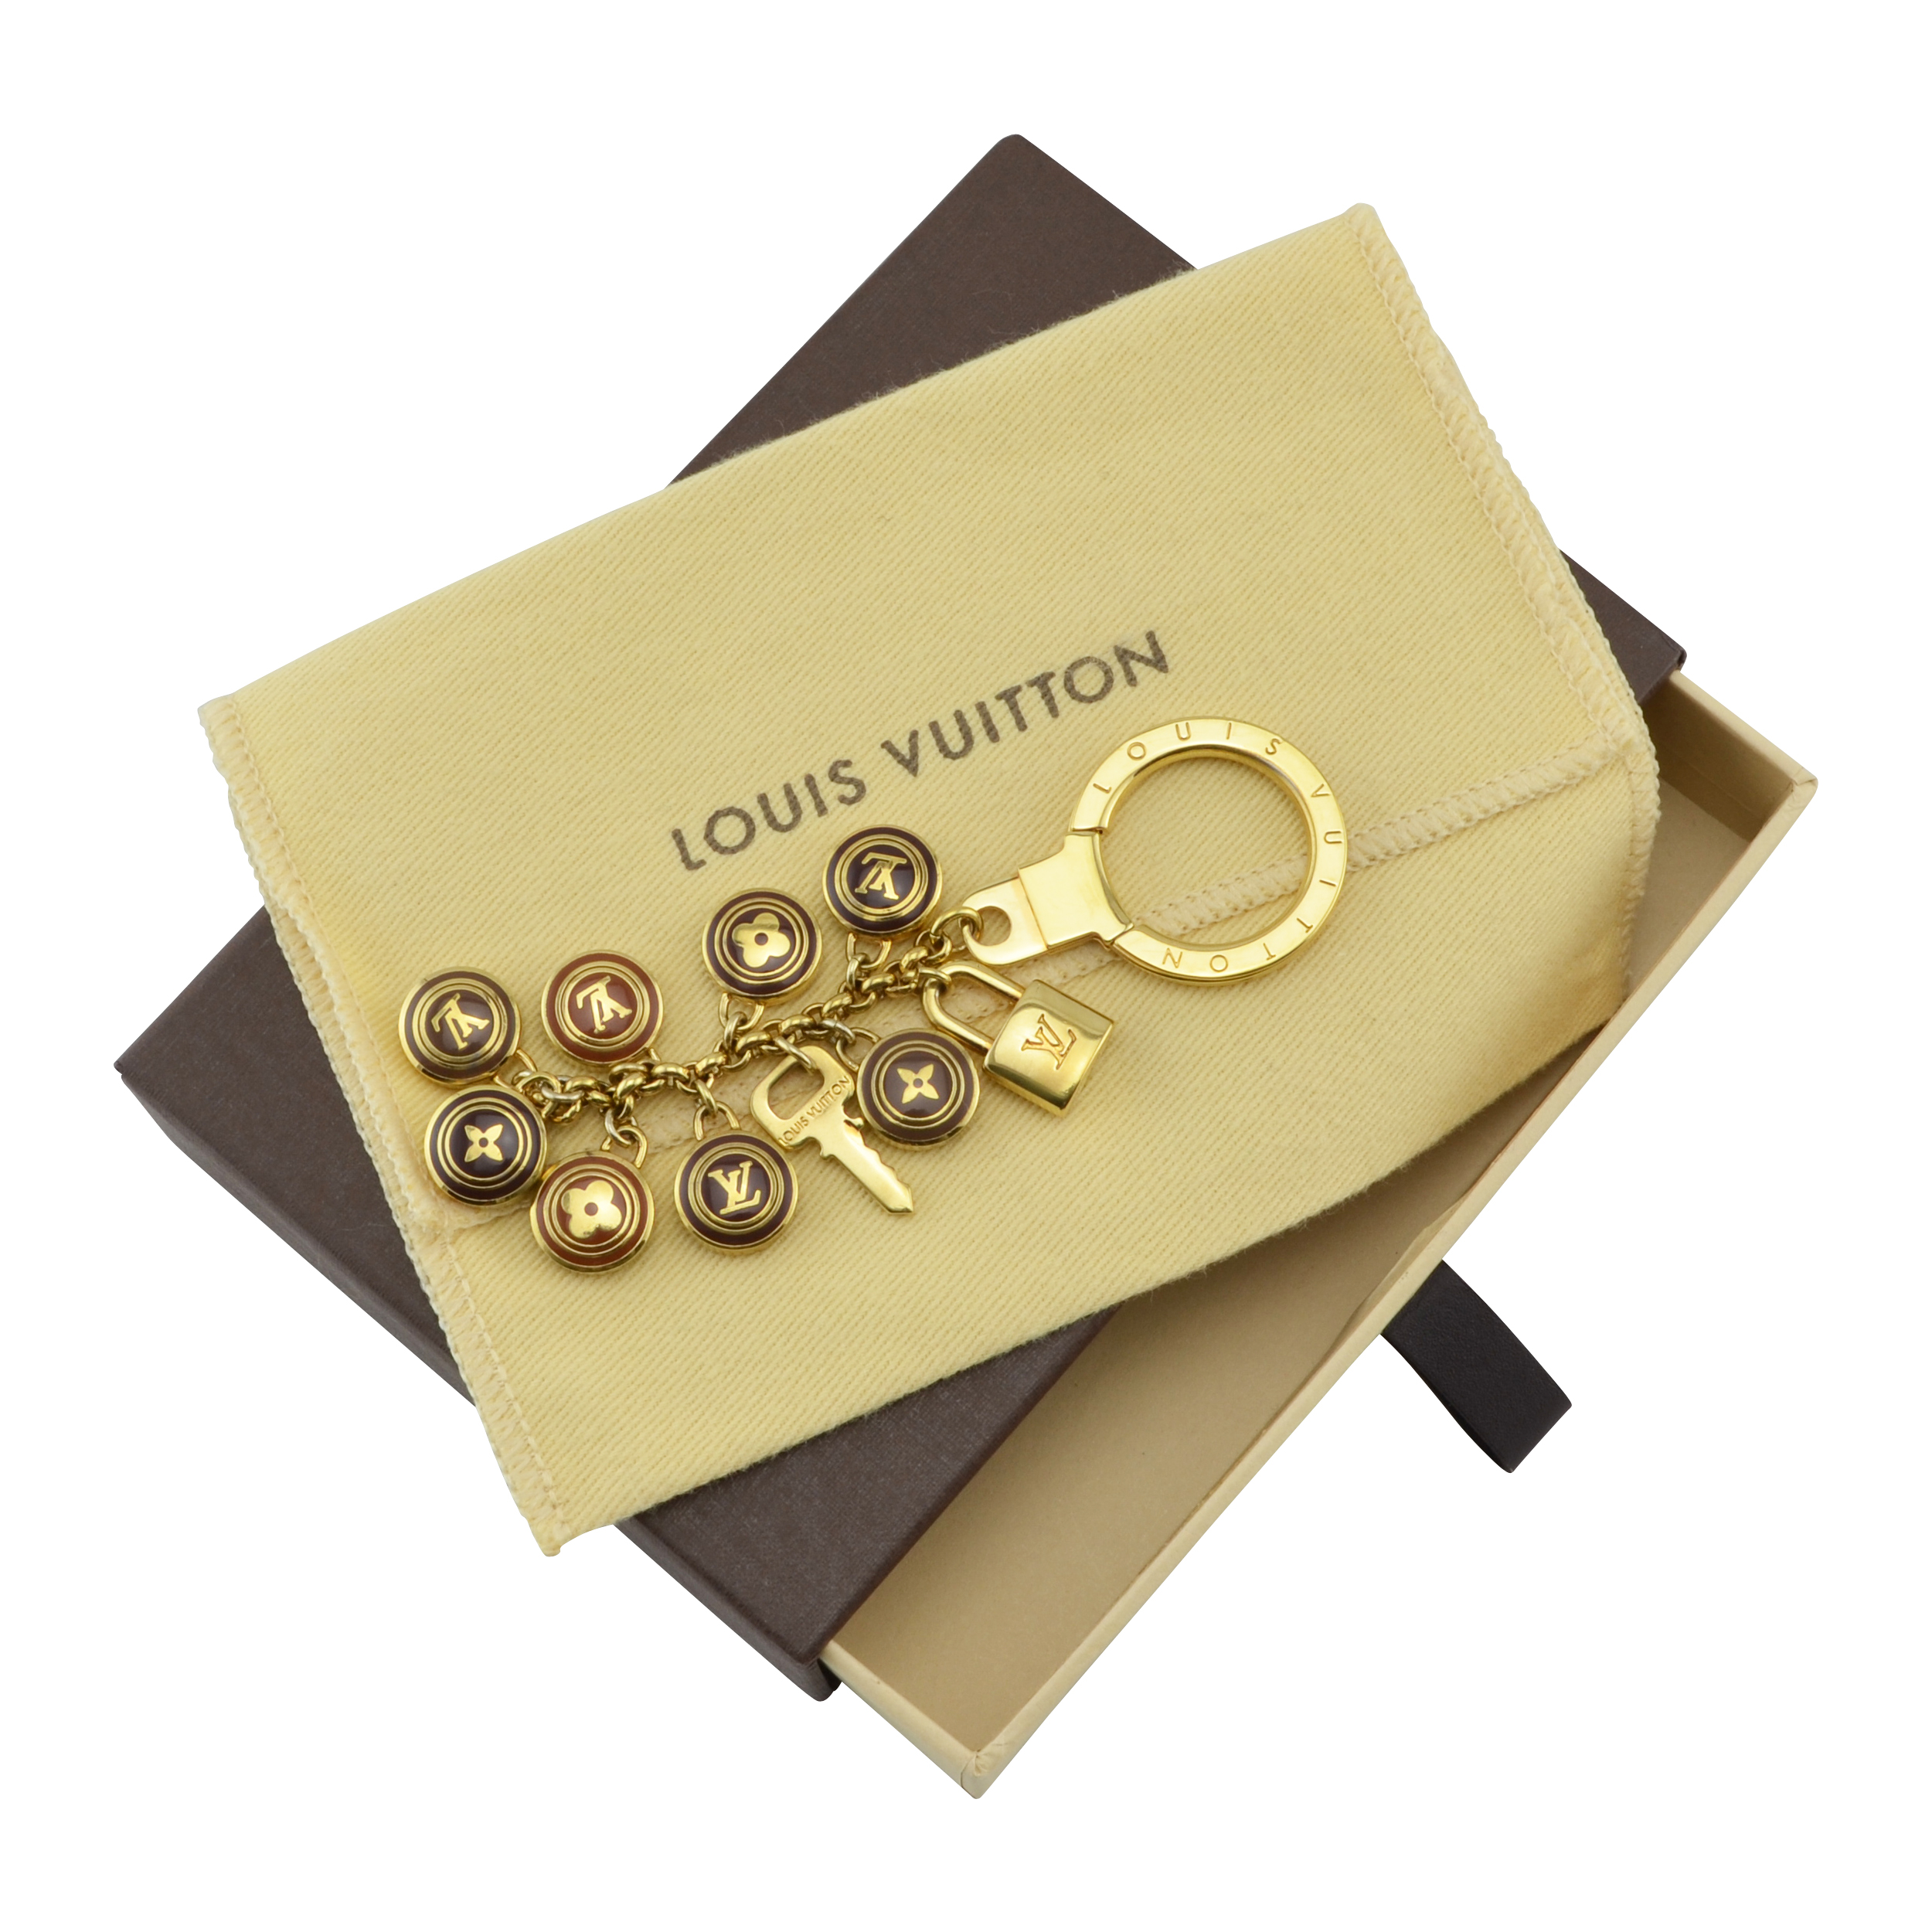 LOUIS VUITTON Pastilles Key Chain Bag Charm Brown 1190042